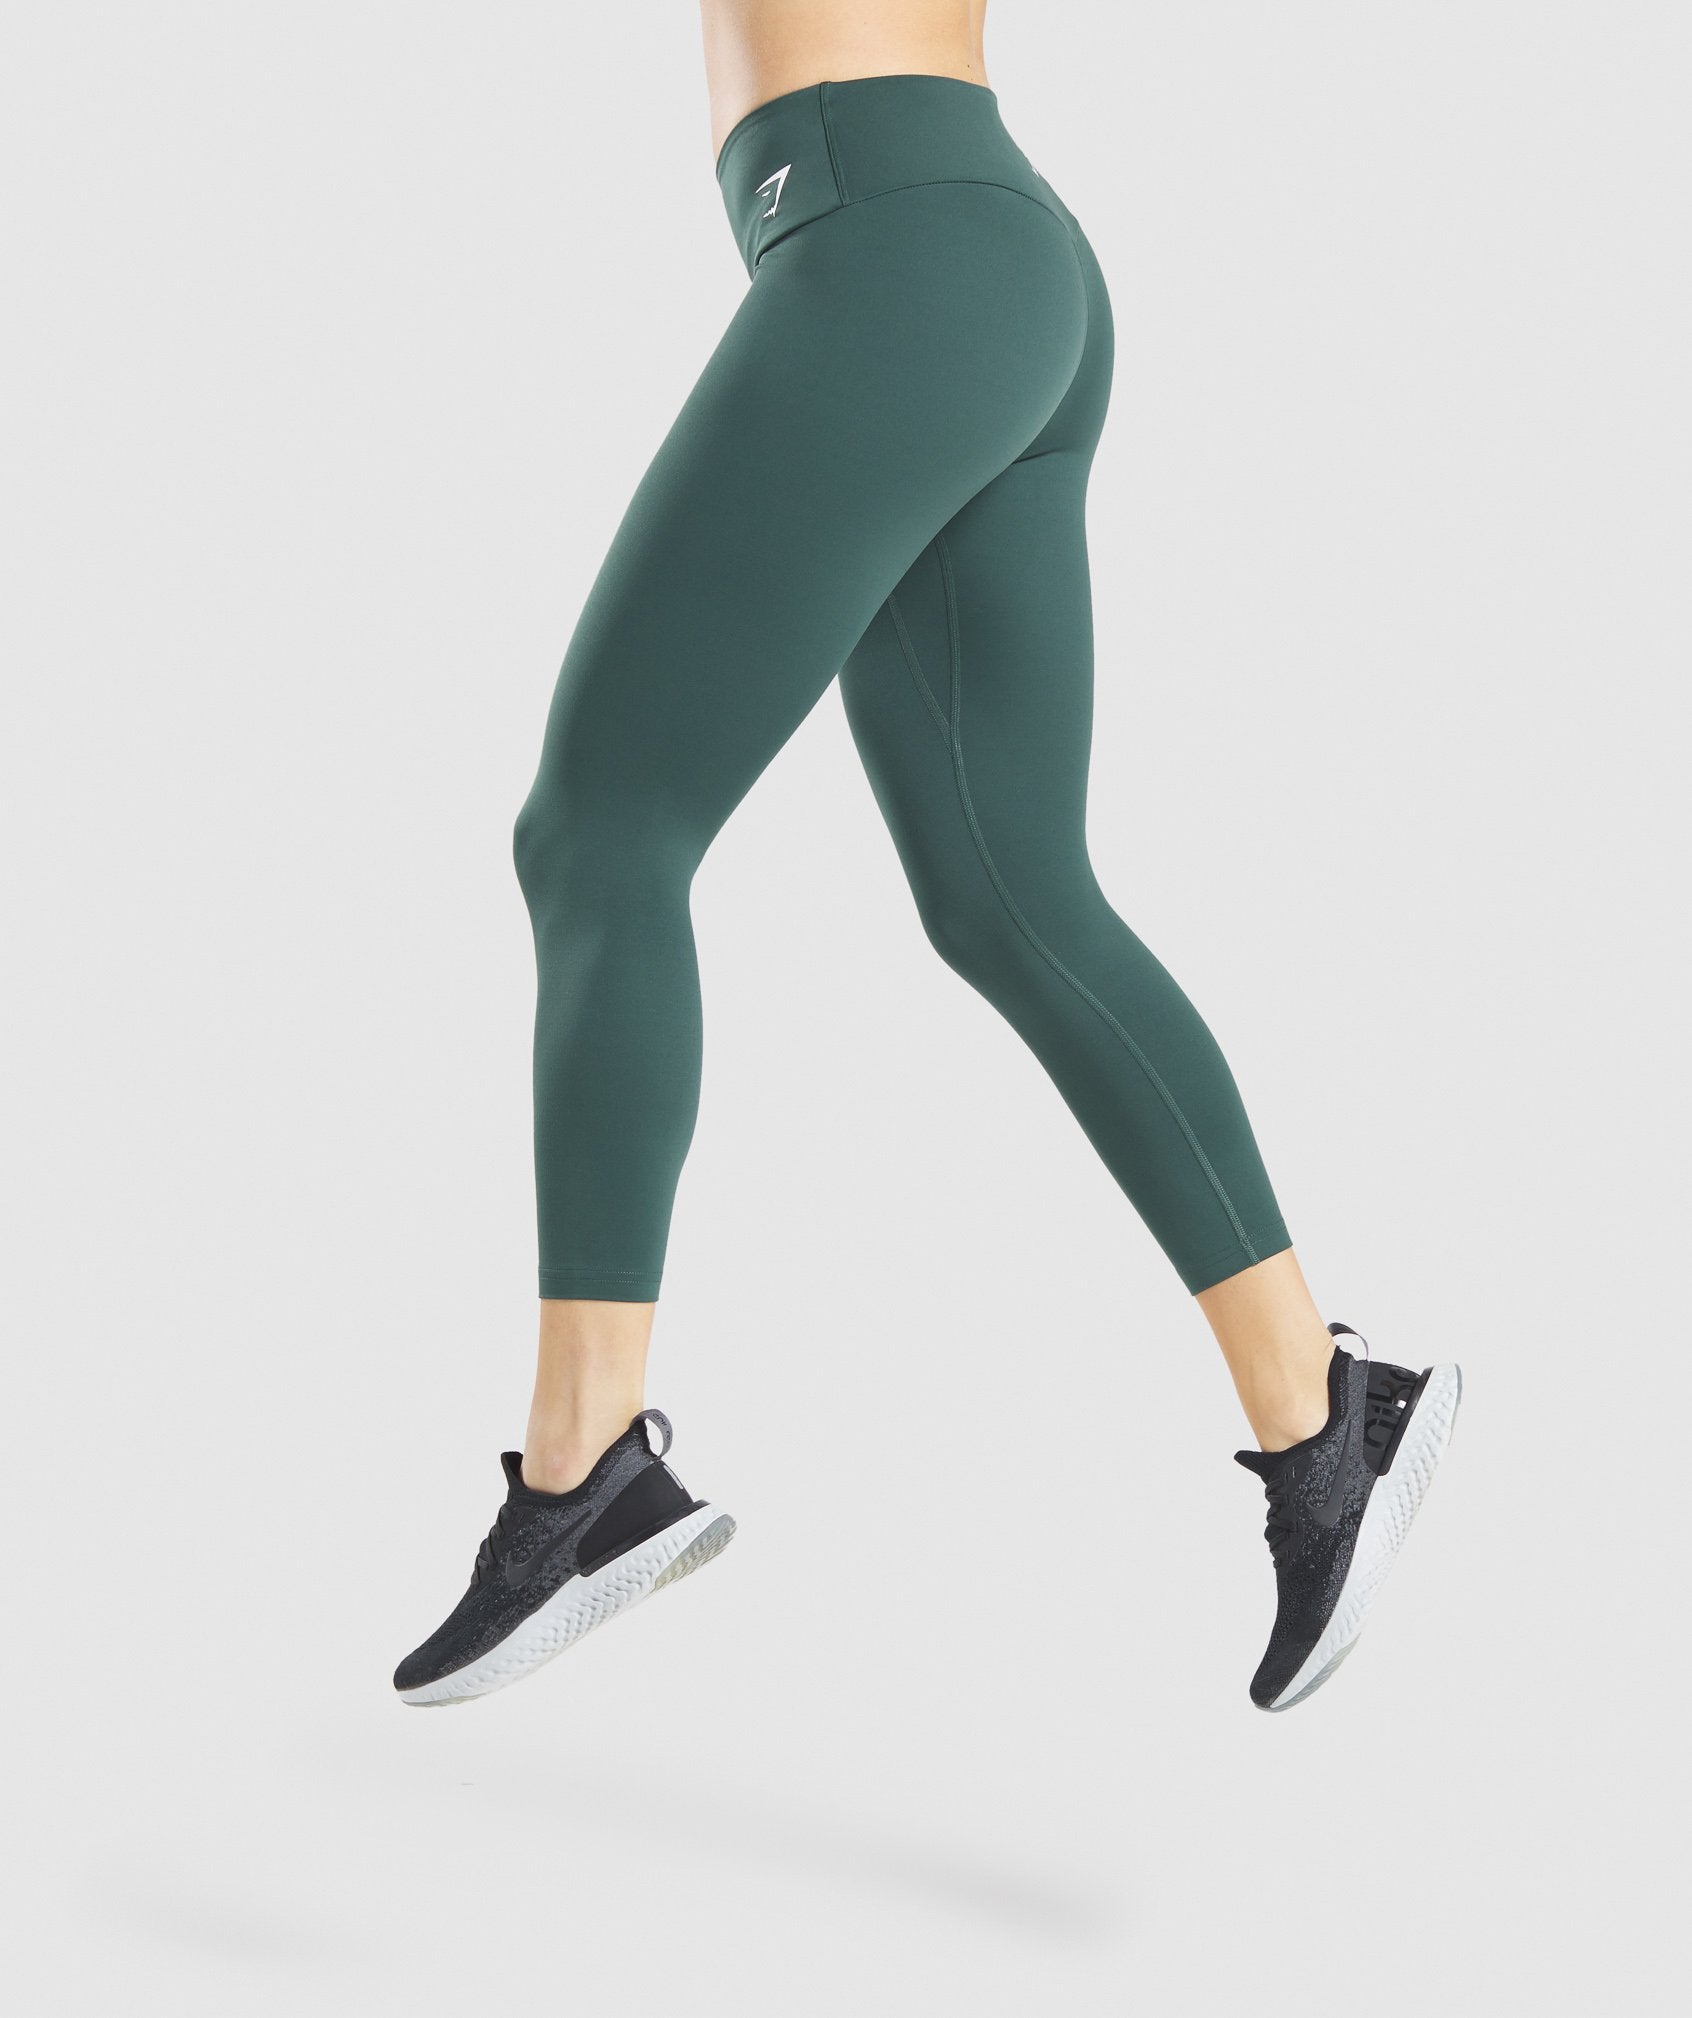 New Gymshark Illumination Leggings. Size Medium M Colour Charged Emerald  (Green)